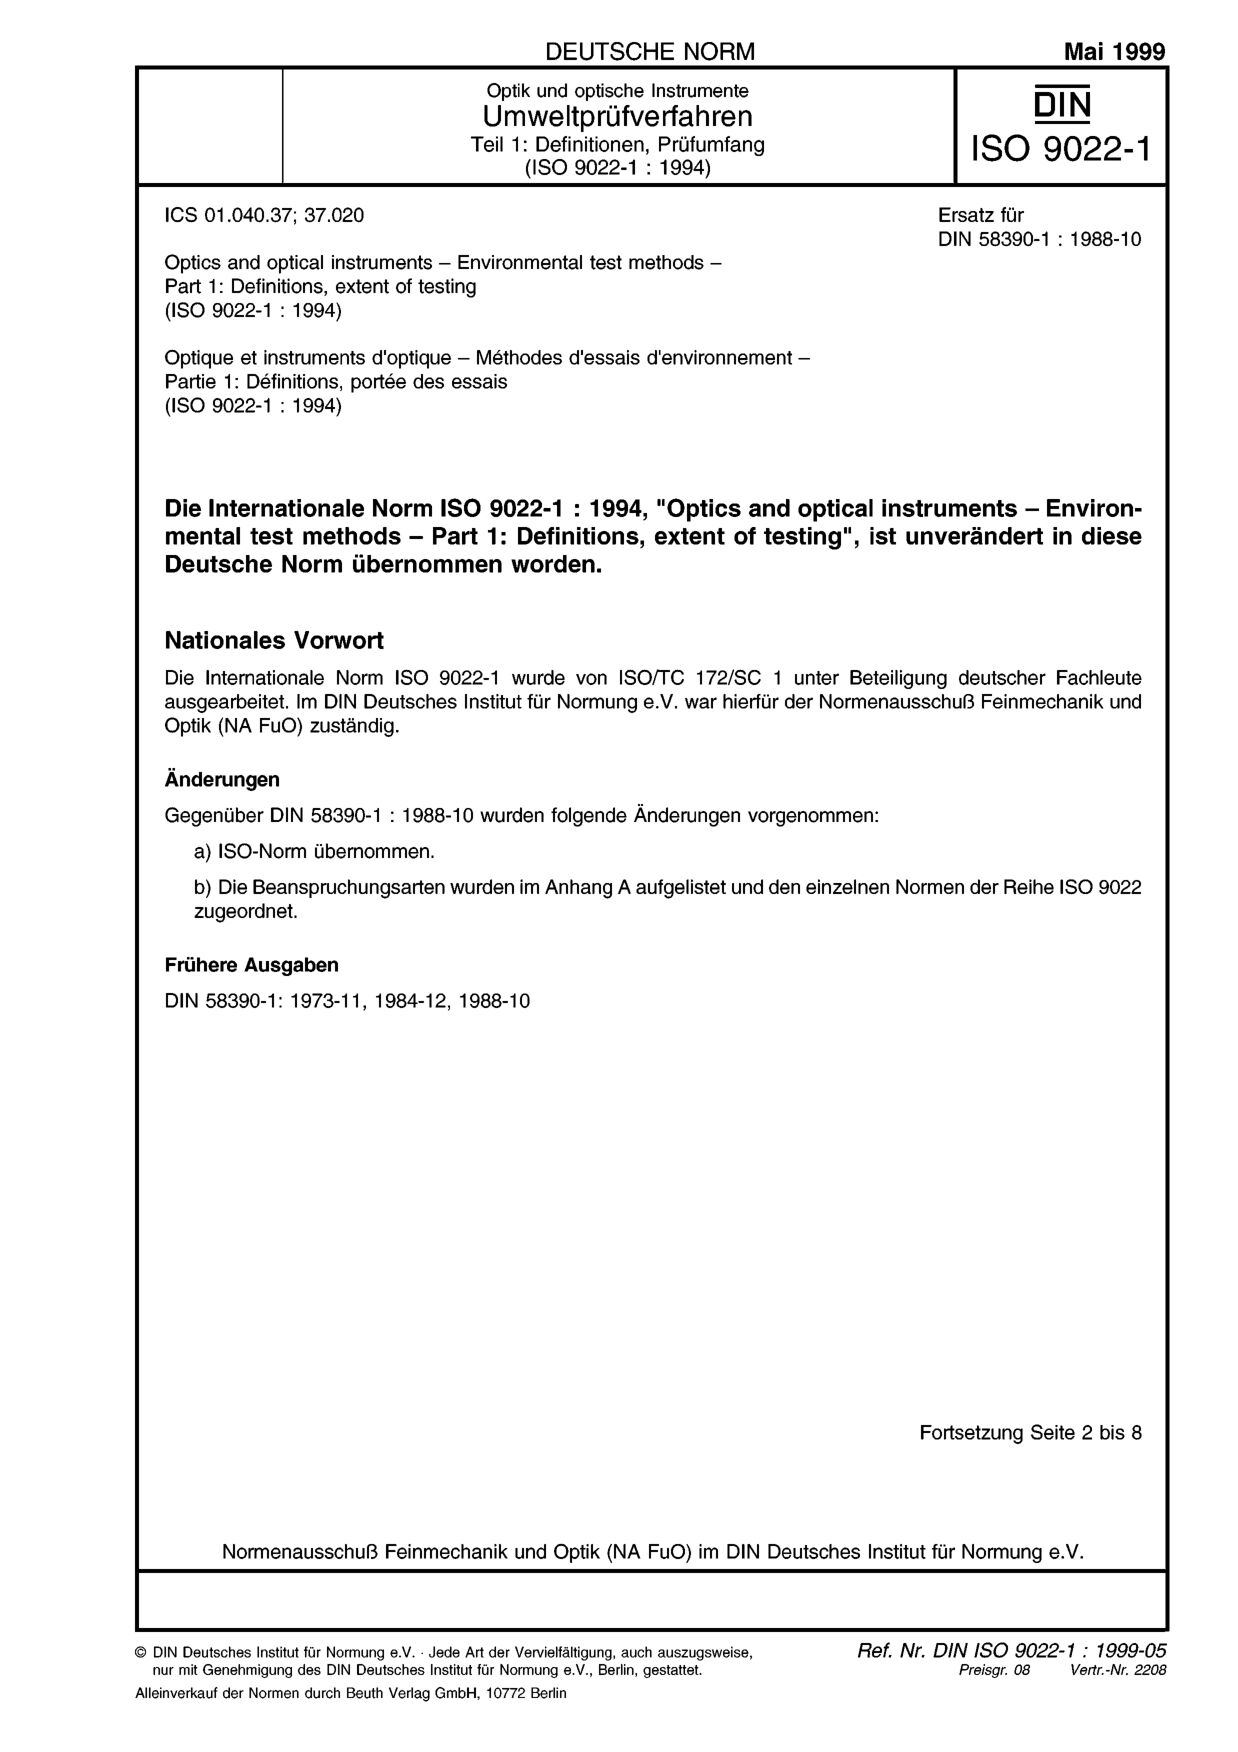 DIN ISO 9022-1:1999-05